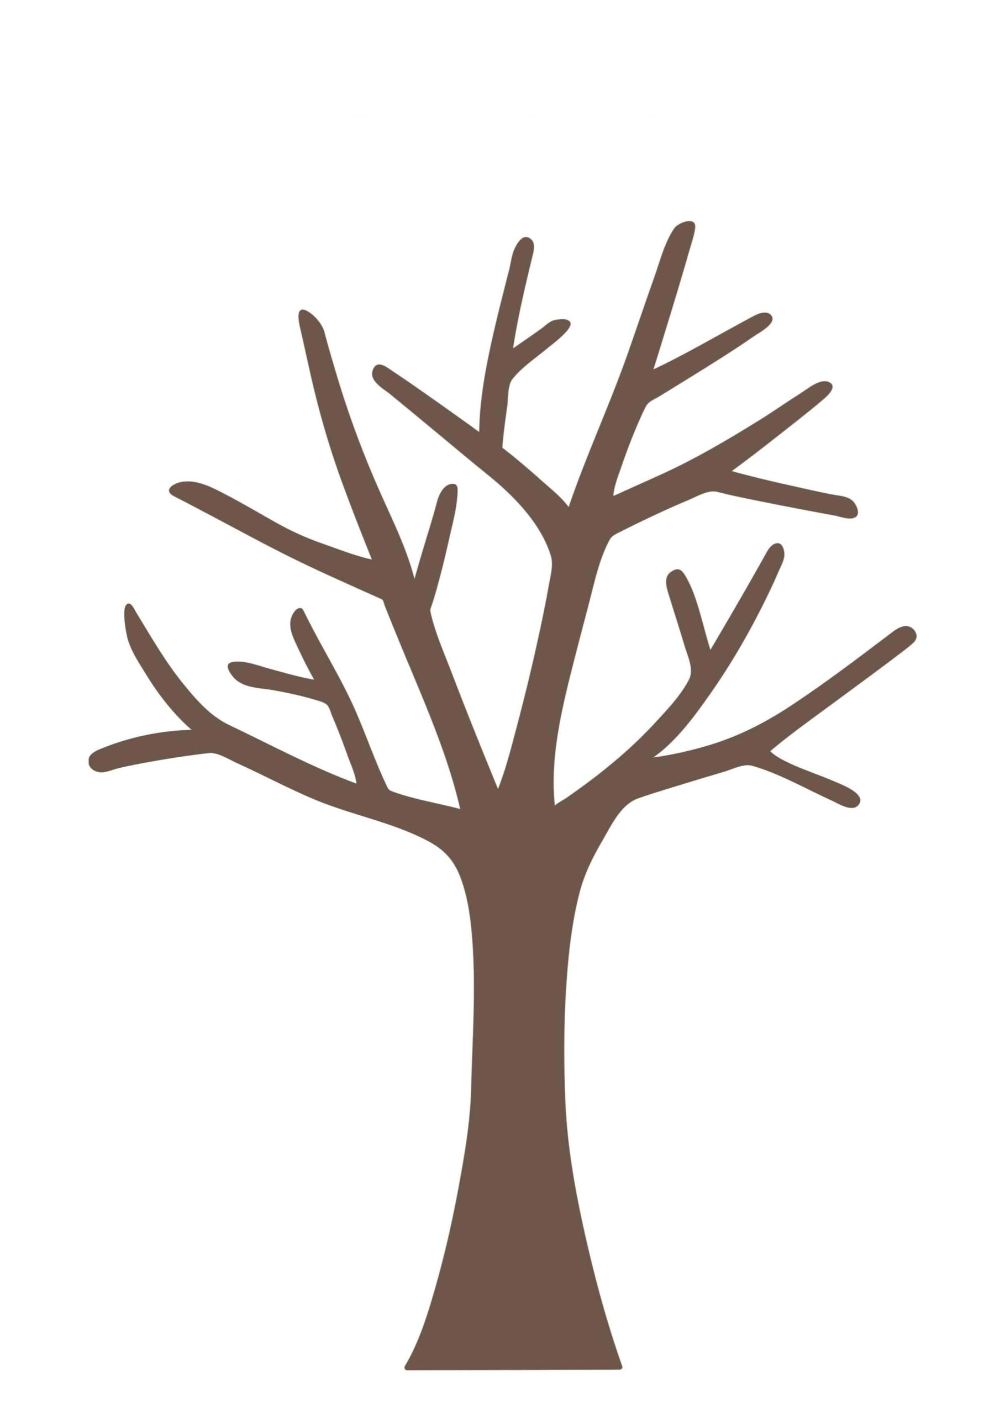 Шаблон дерево без листьев для аппликации